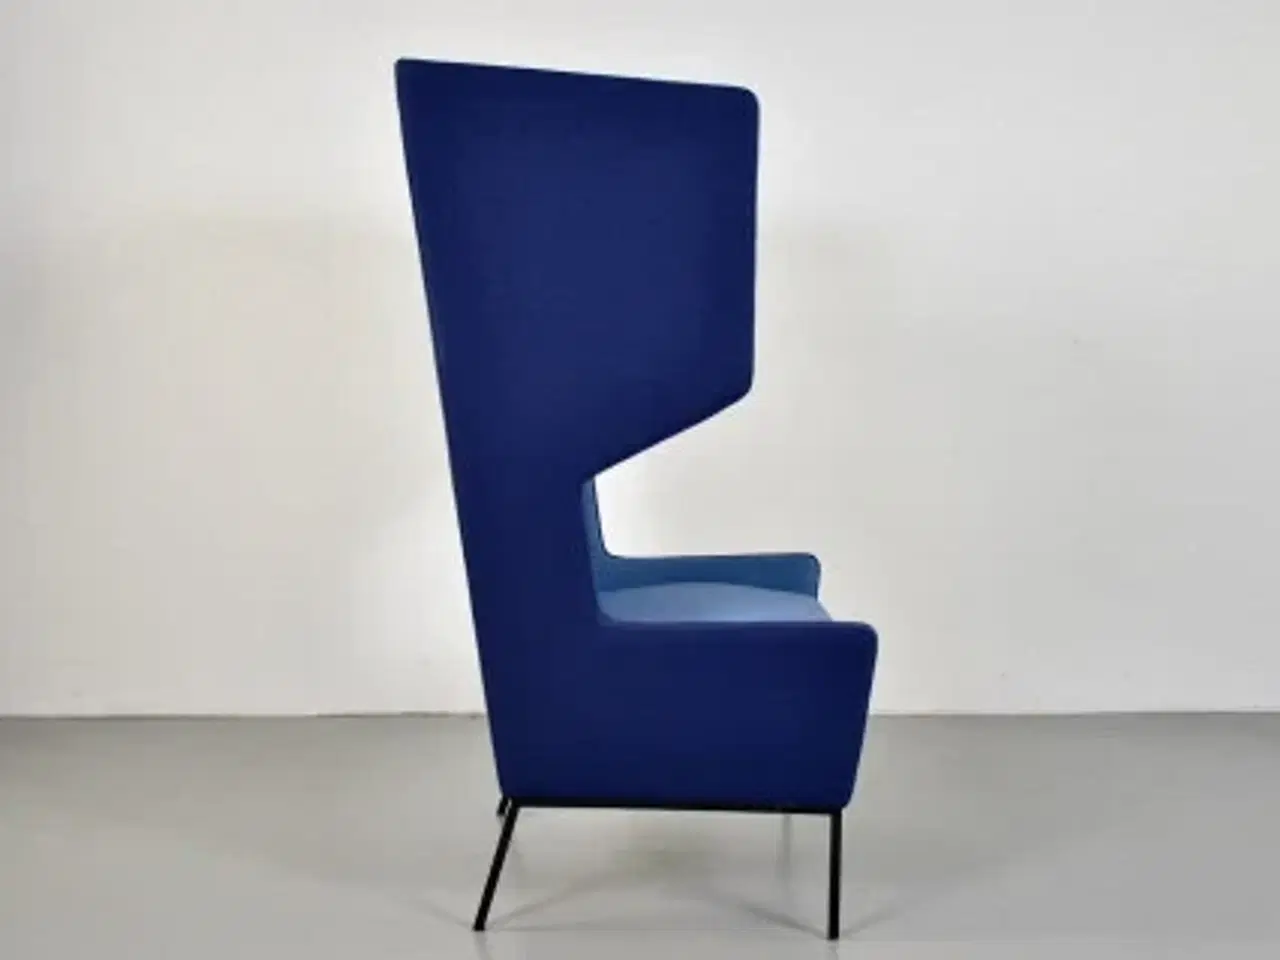 Billede 2 - Borg loungestol med høj ryg, i blå farver